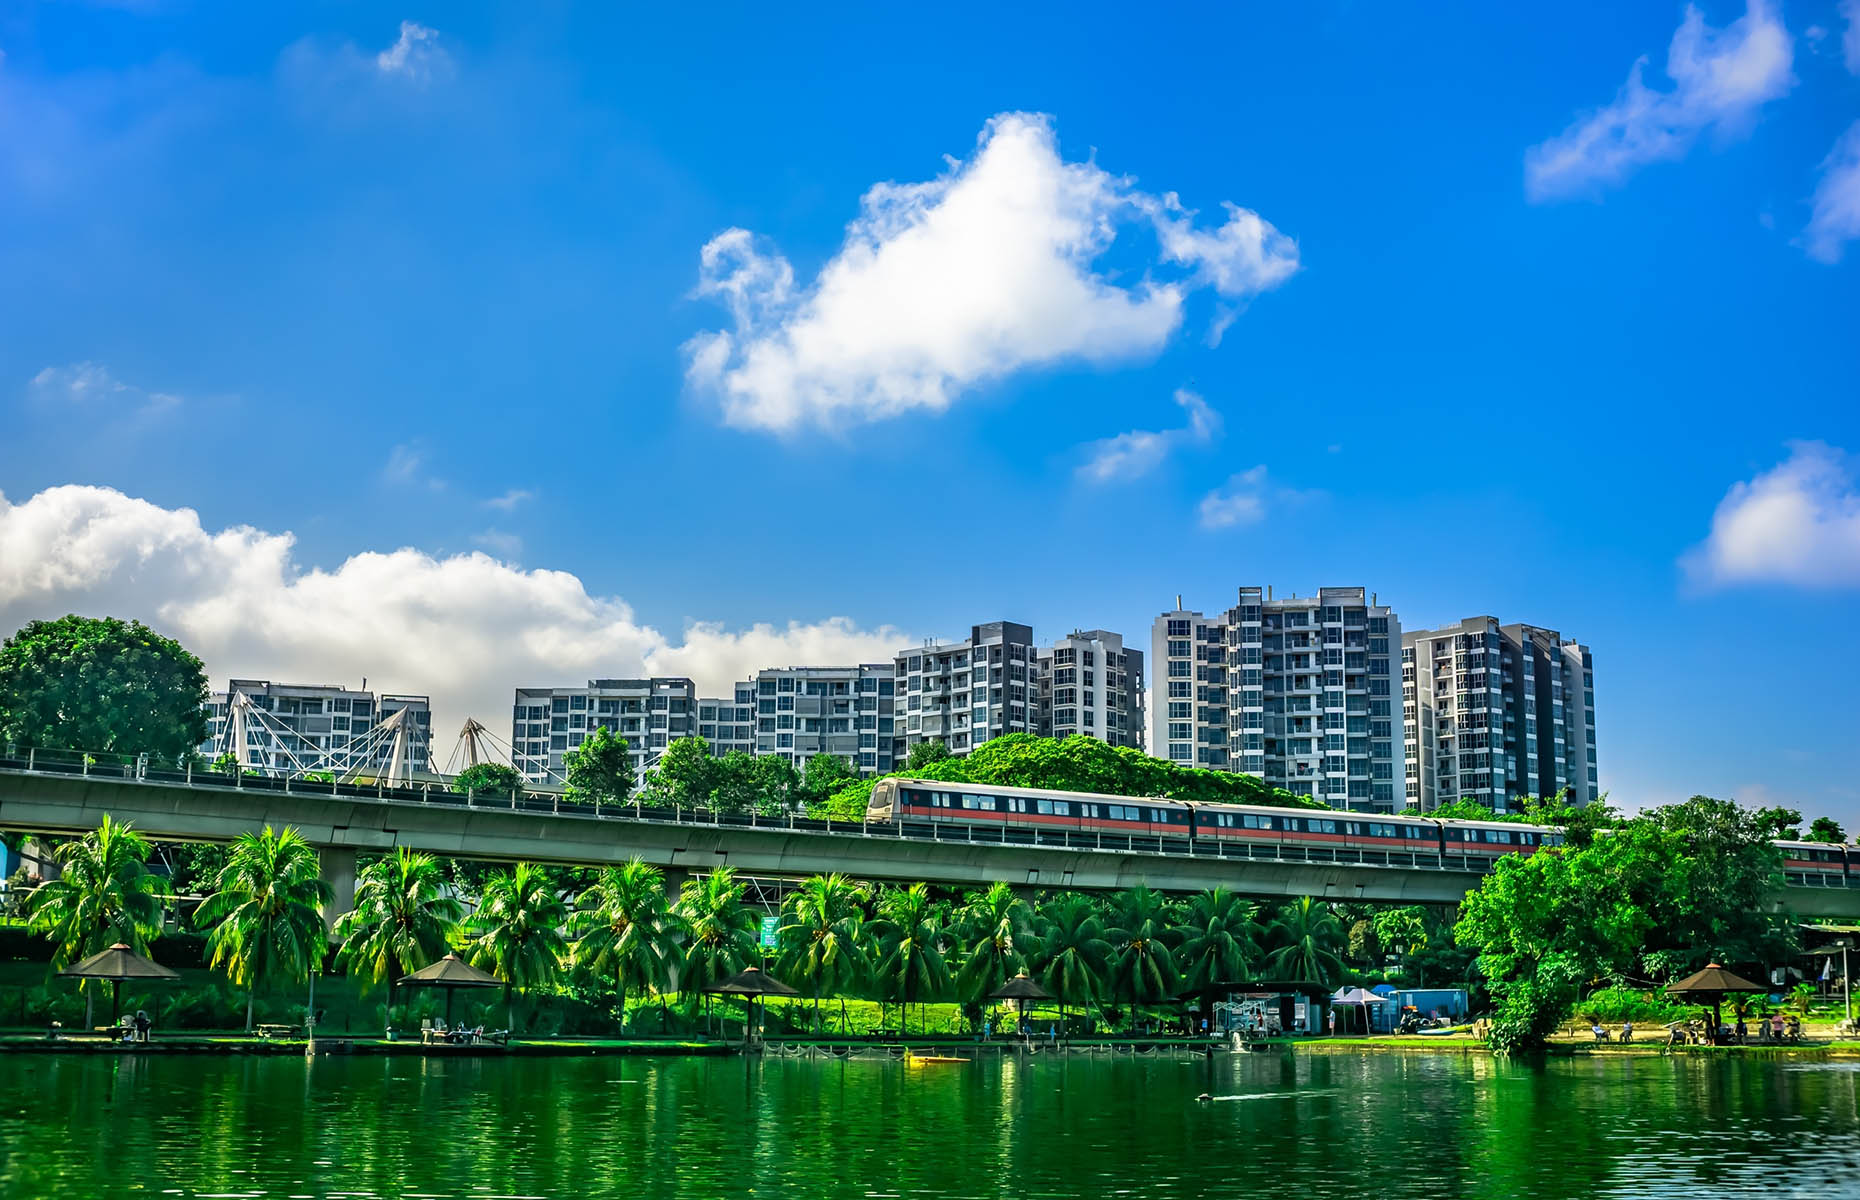 MRT travelling through Yishun Town, Singapore (Image: DerekTeo/Shutterstock)